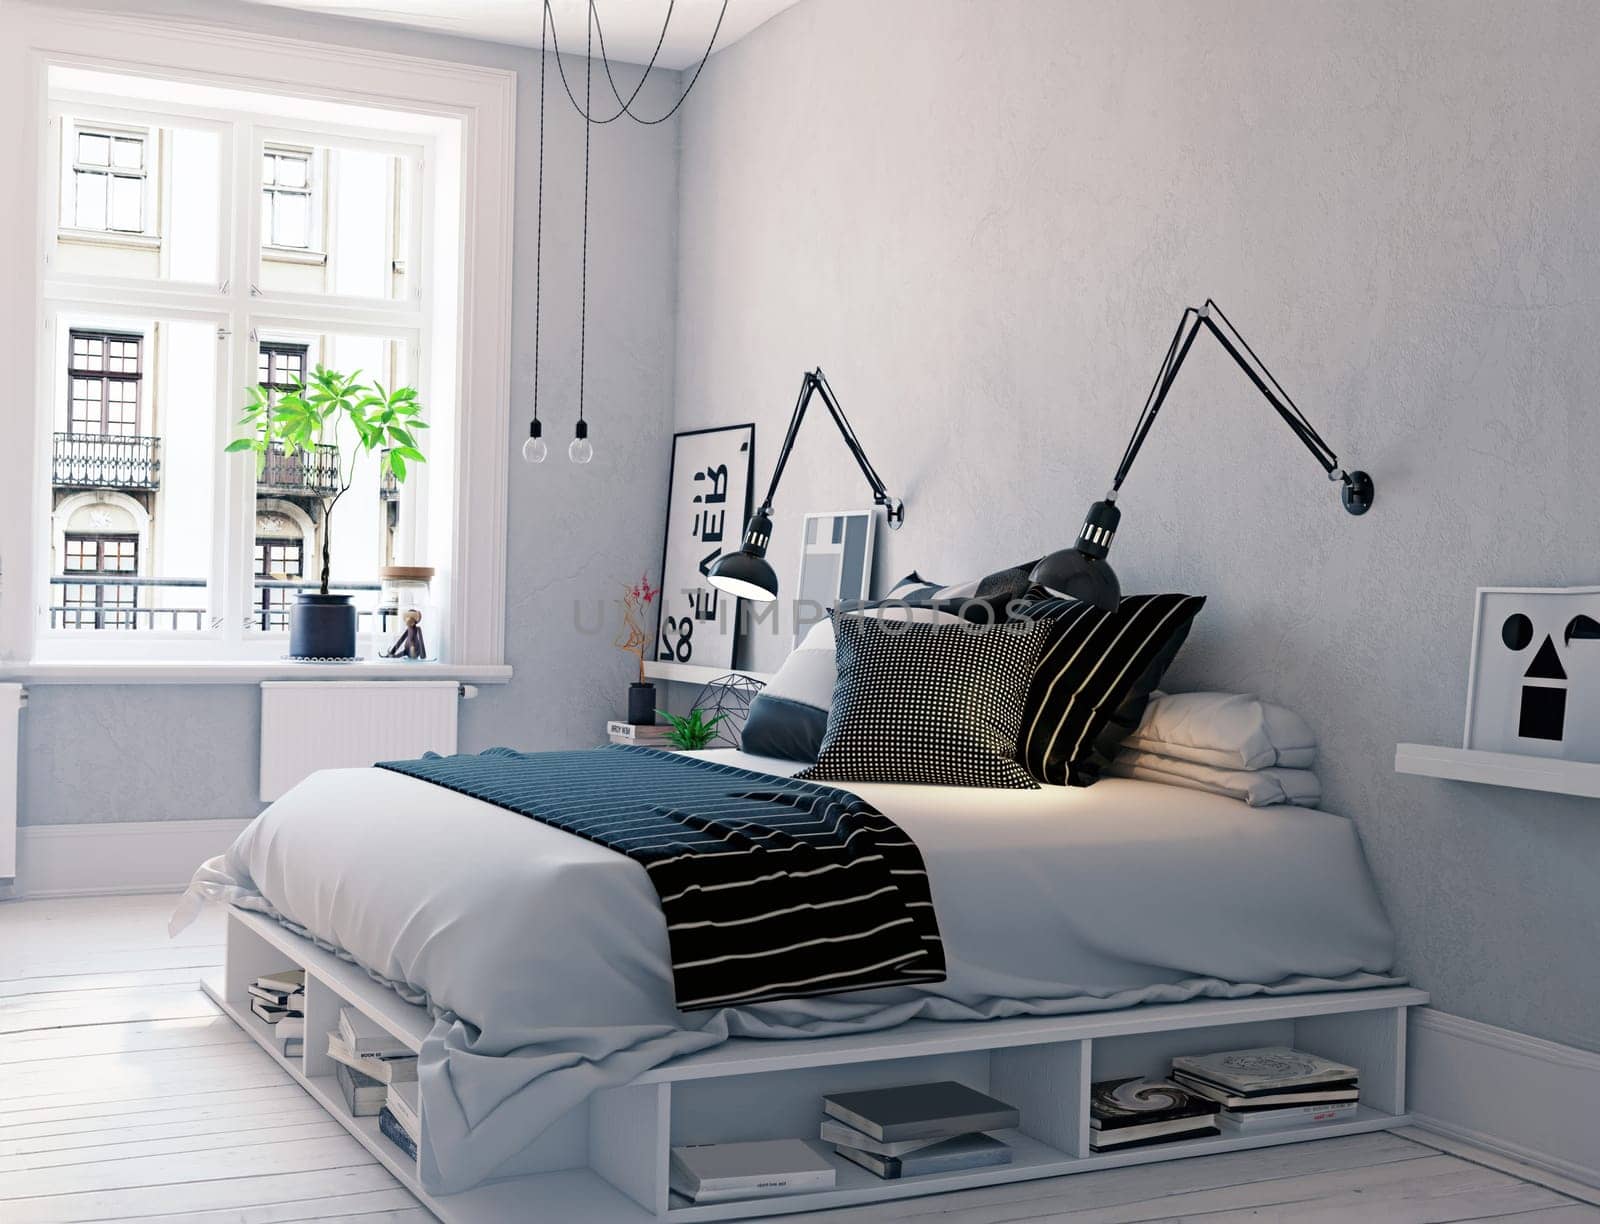 modern bedroom interior. 3d rendering design concept